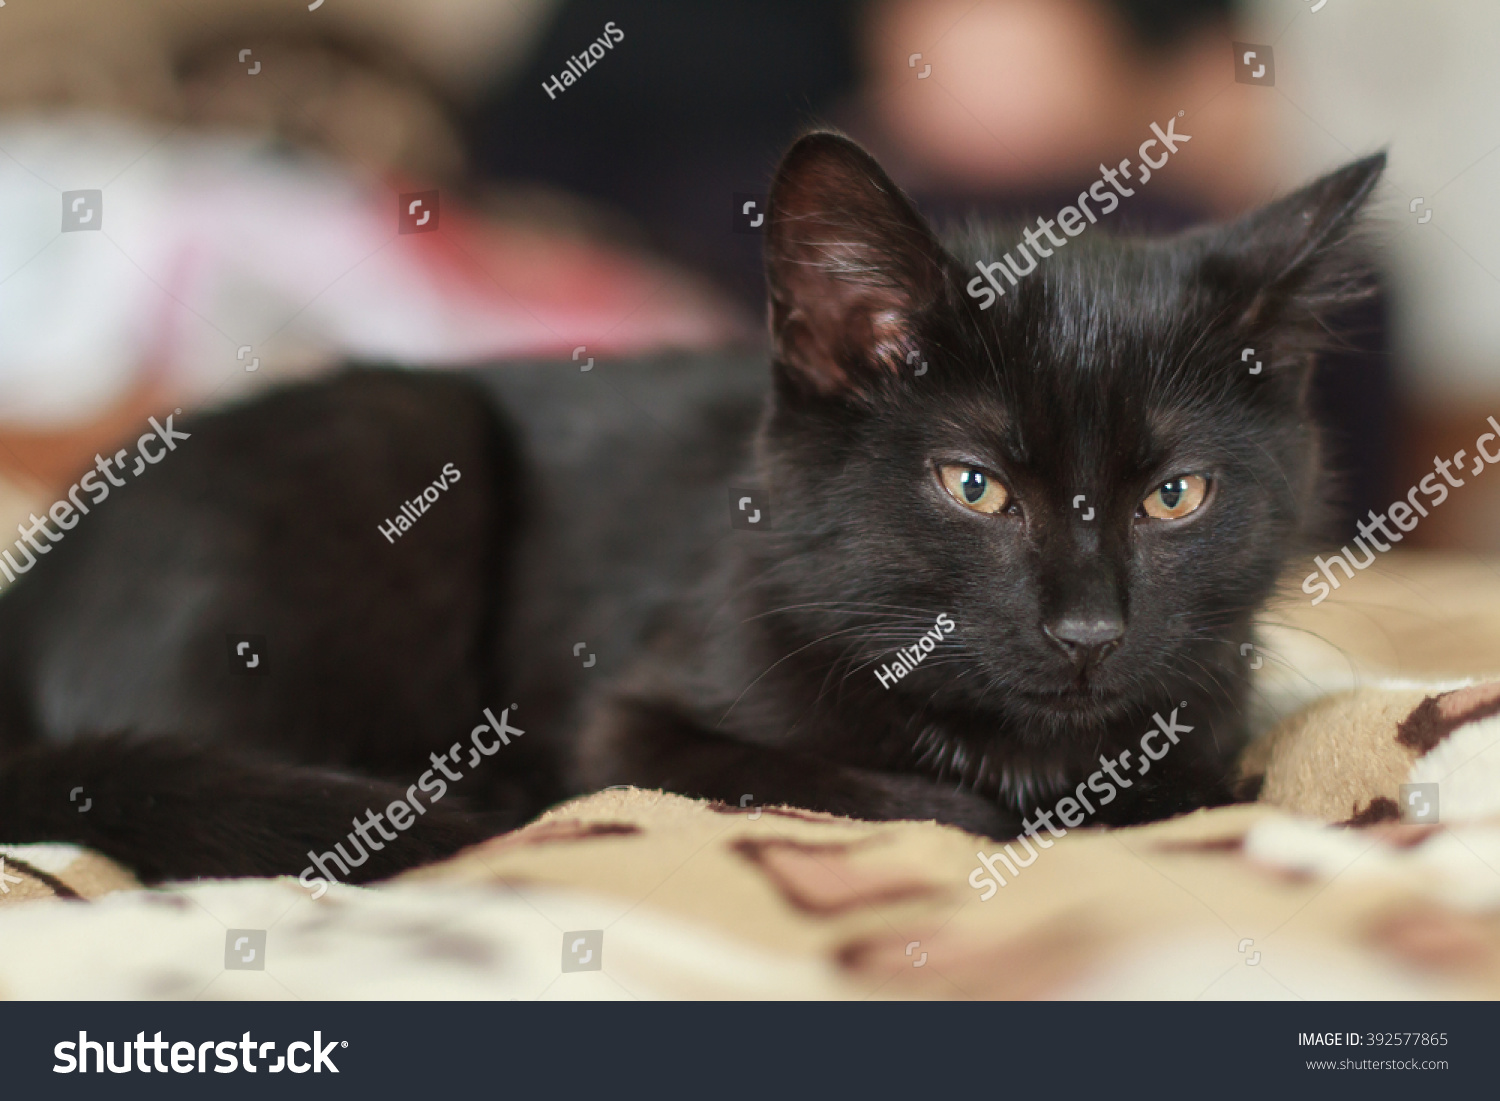 Portrait Black Cat Stock Photo 392577865 - Shutterstock